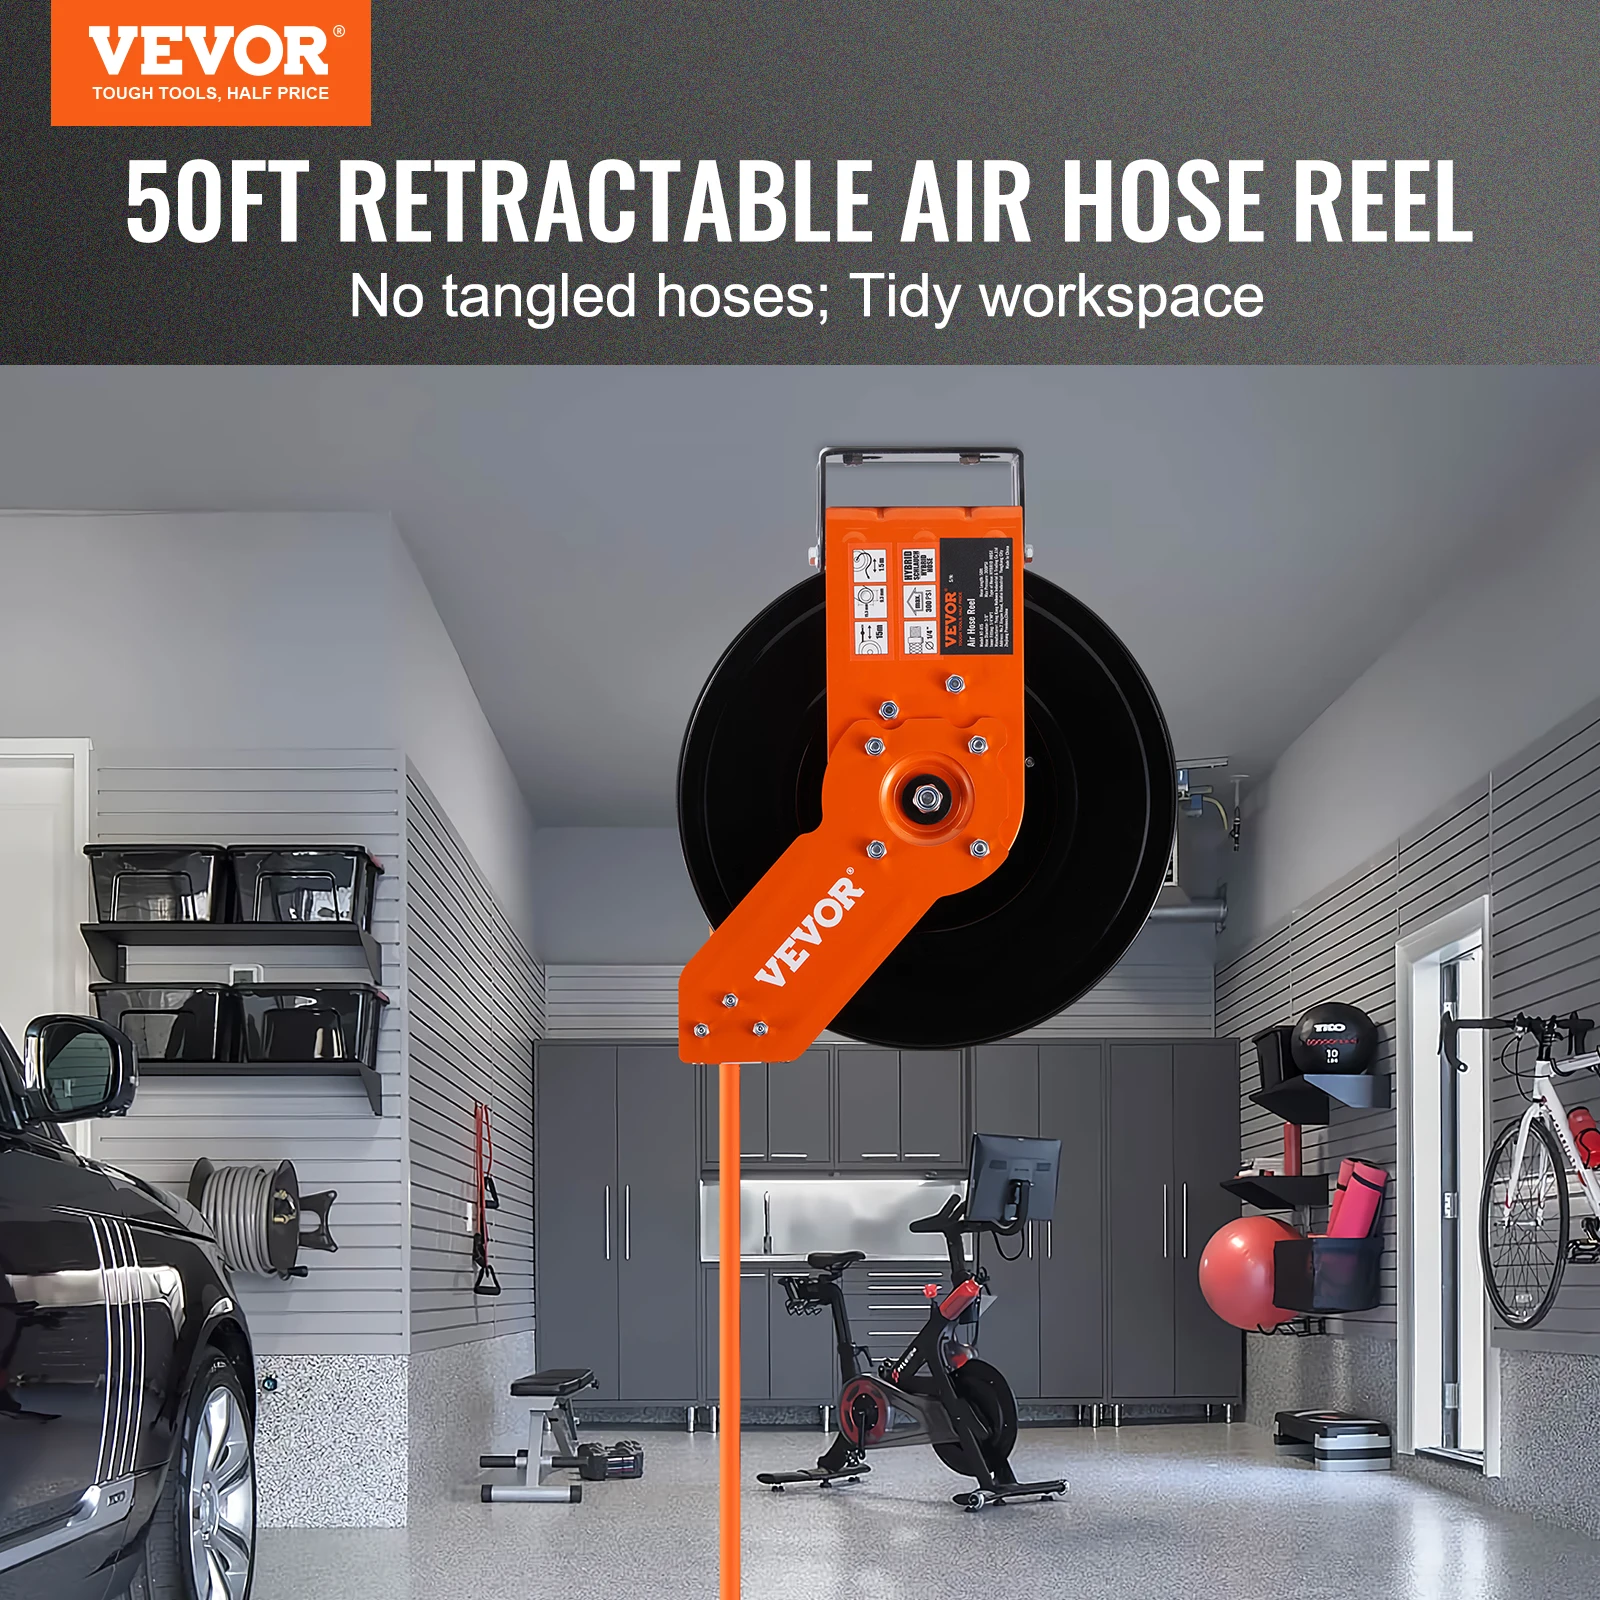 VEVOR Retractable Air Hose Reel 50 FT Hybrid Air Compressor